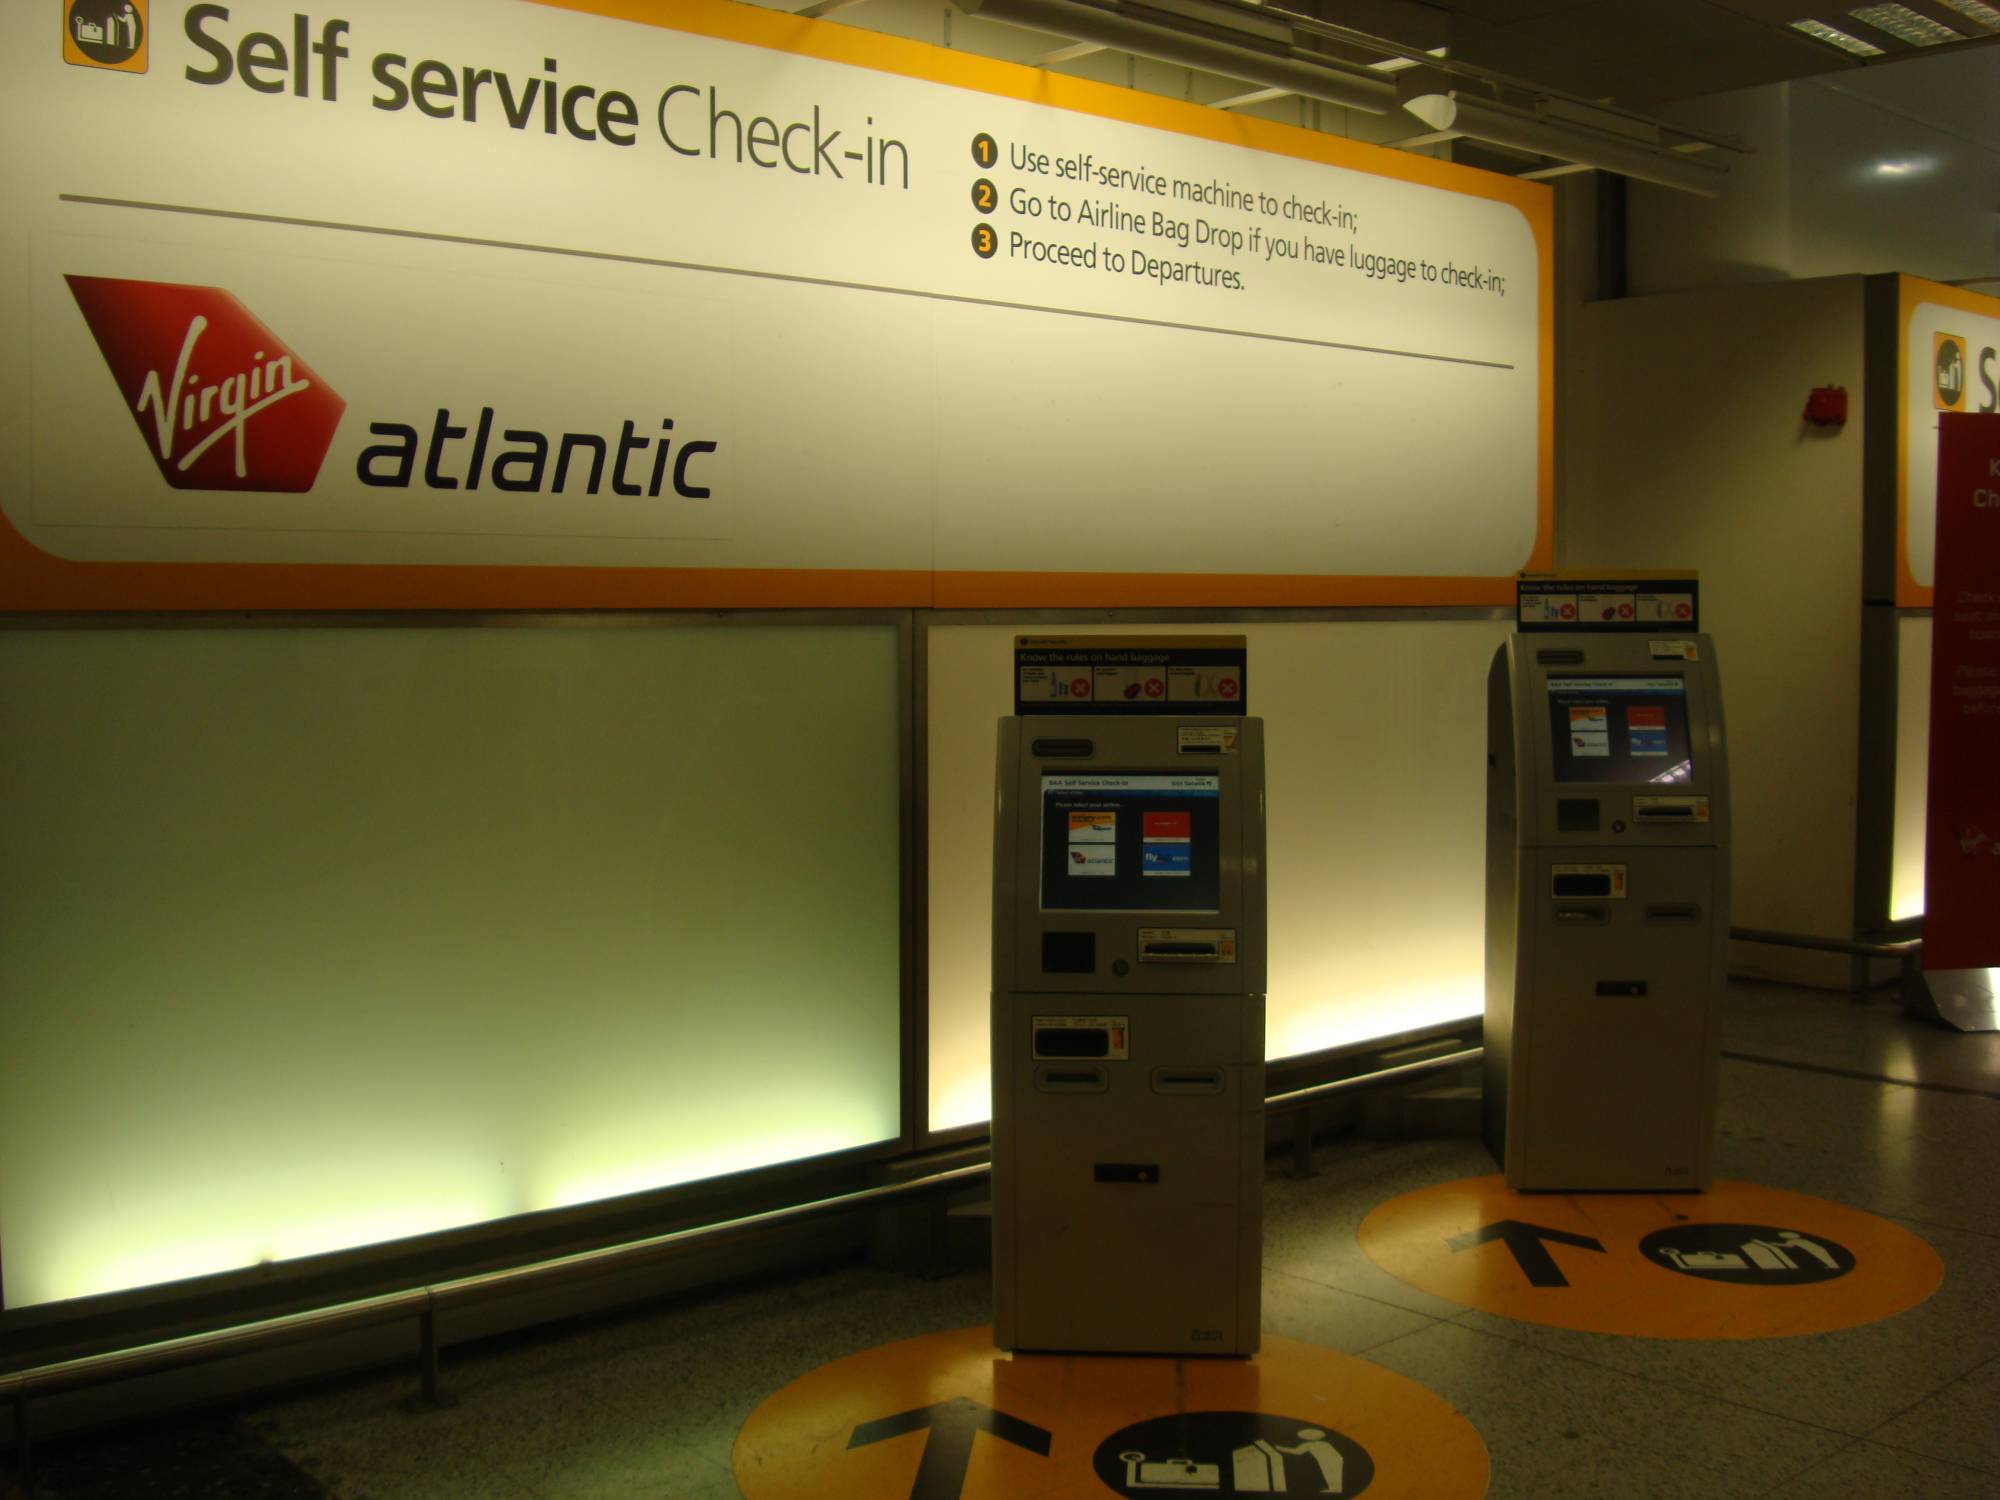 Gatwick - Virgin Atlantic's self-service check-in